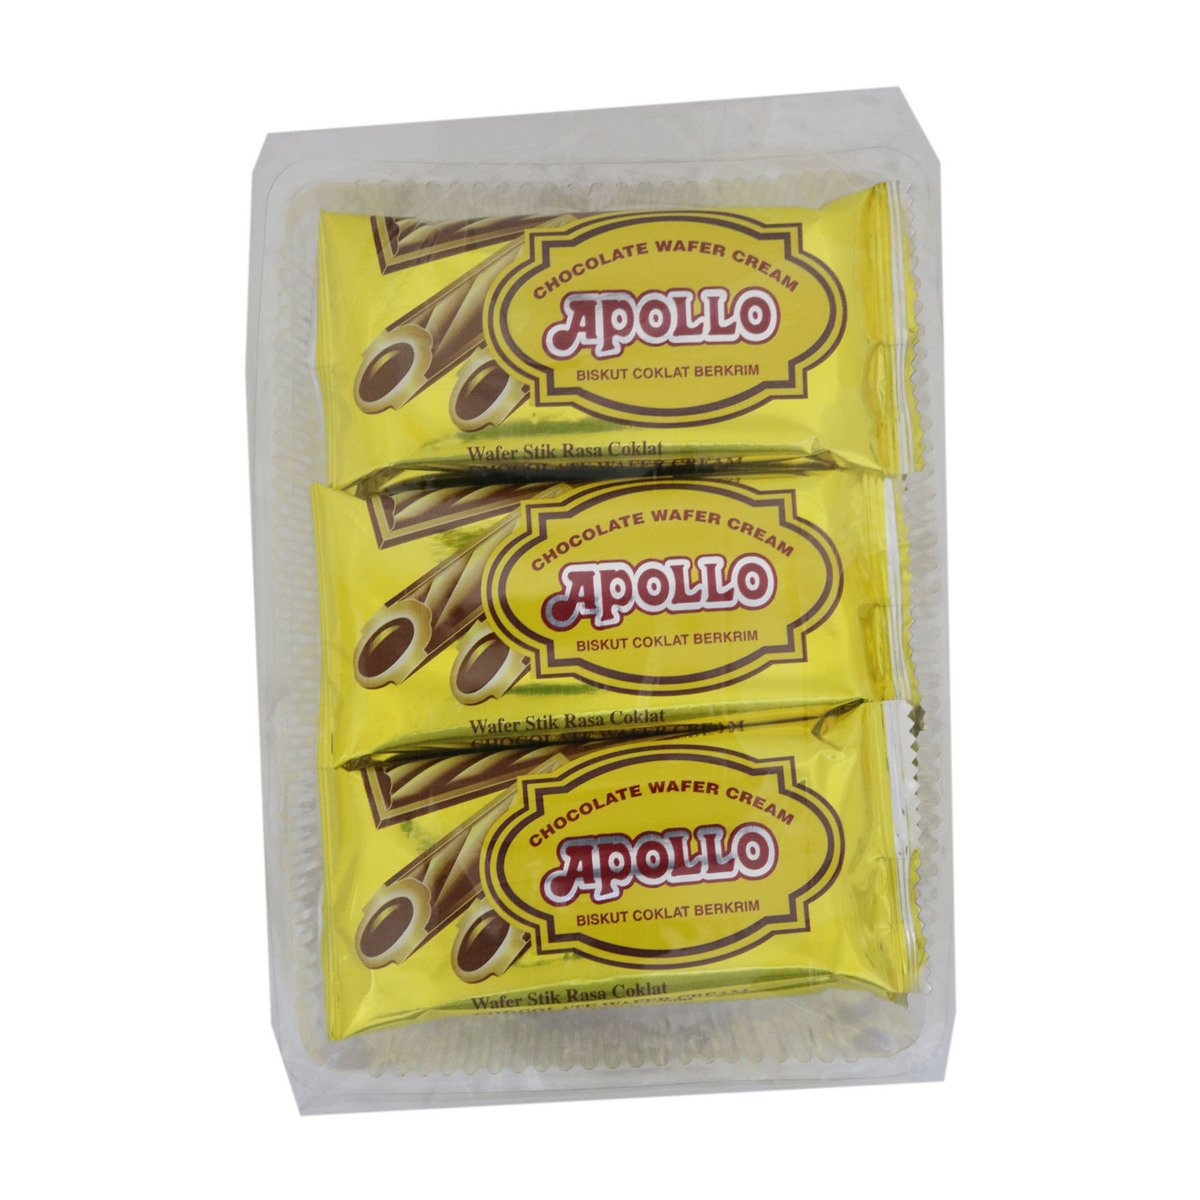 Apollo Chocolate Stick Wafer 12pcs